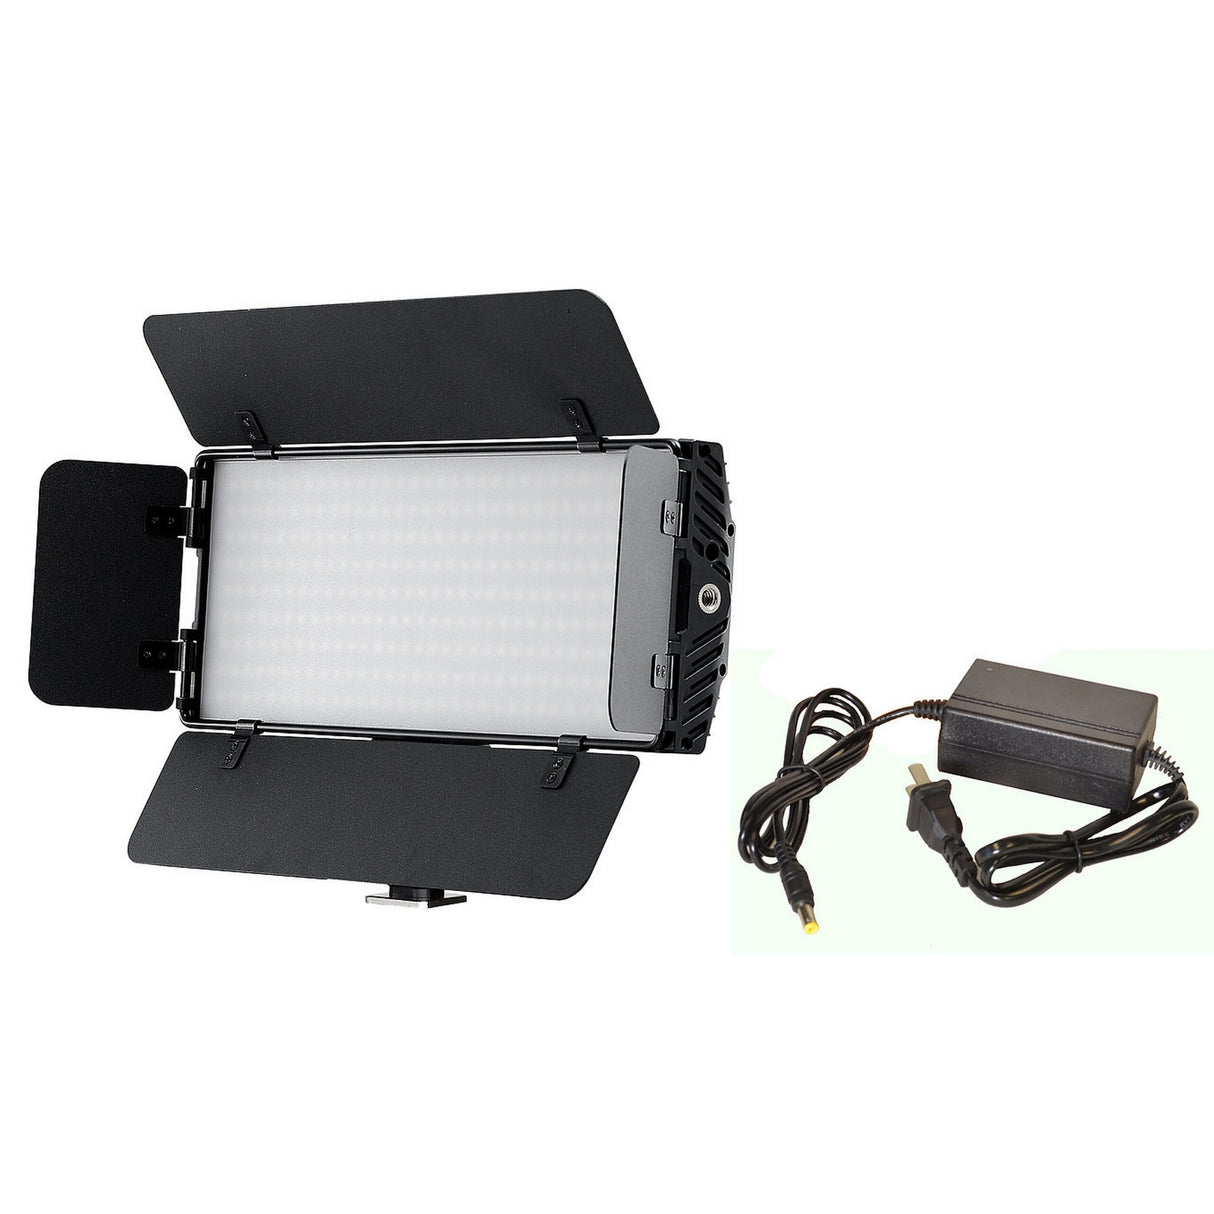 Bescor photonA LED Light and AC Adapter Kit